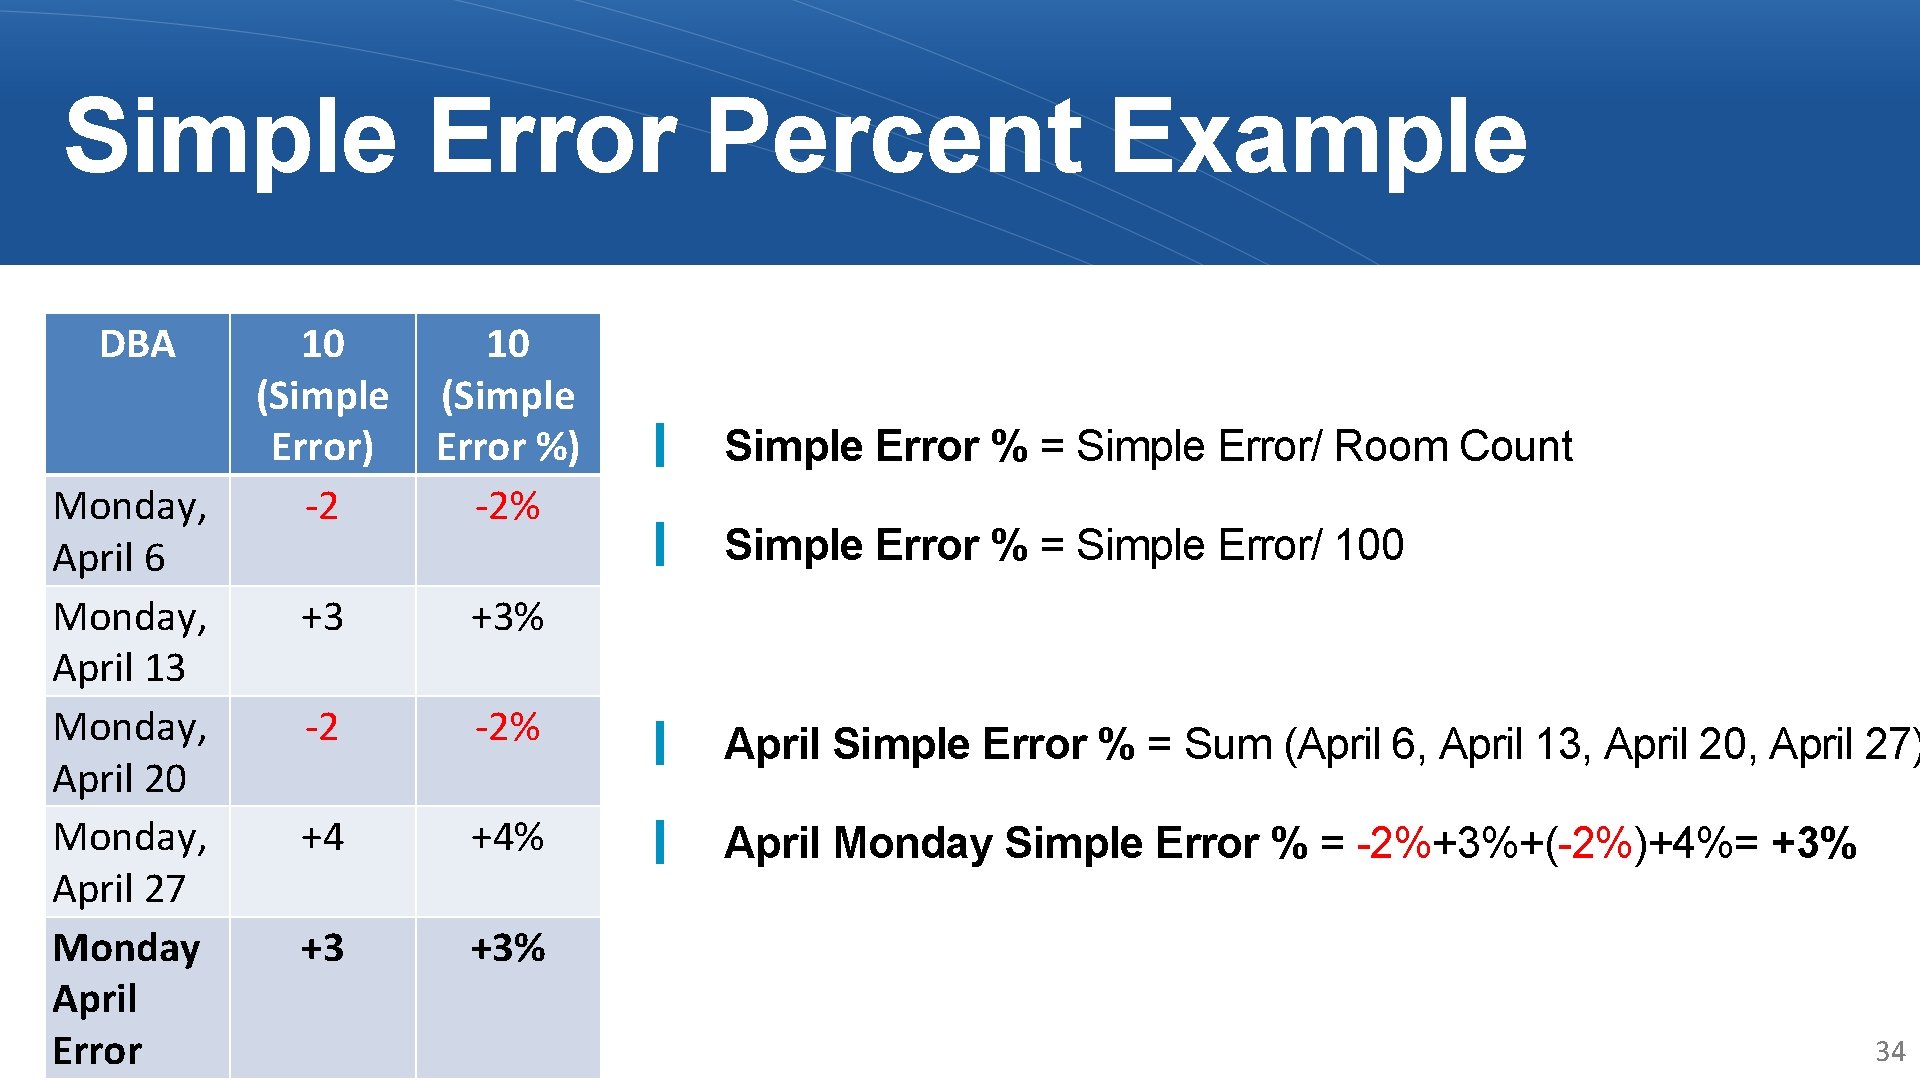 Simple Error Percent Example DBA 10 (Simple Error) Monday, -2 April 6 Monday, +3